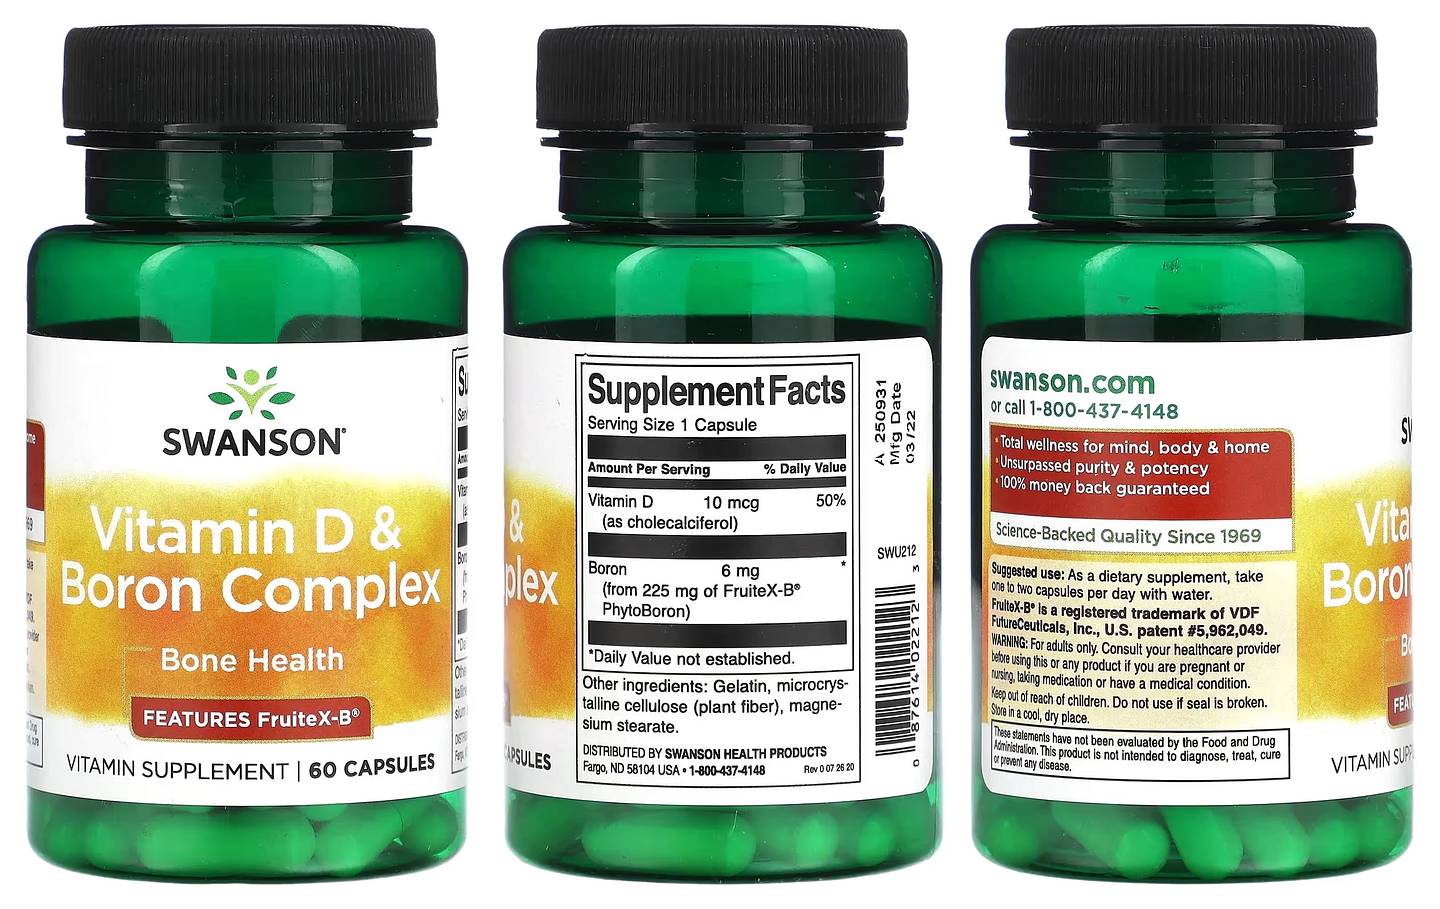 Swanson, Vitamin D & Boron Complex packaging